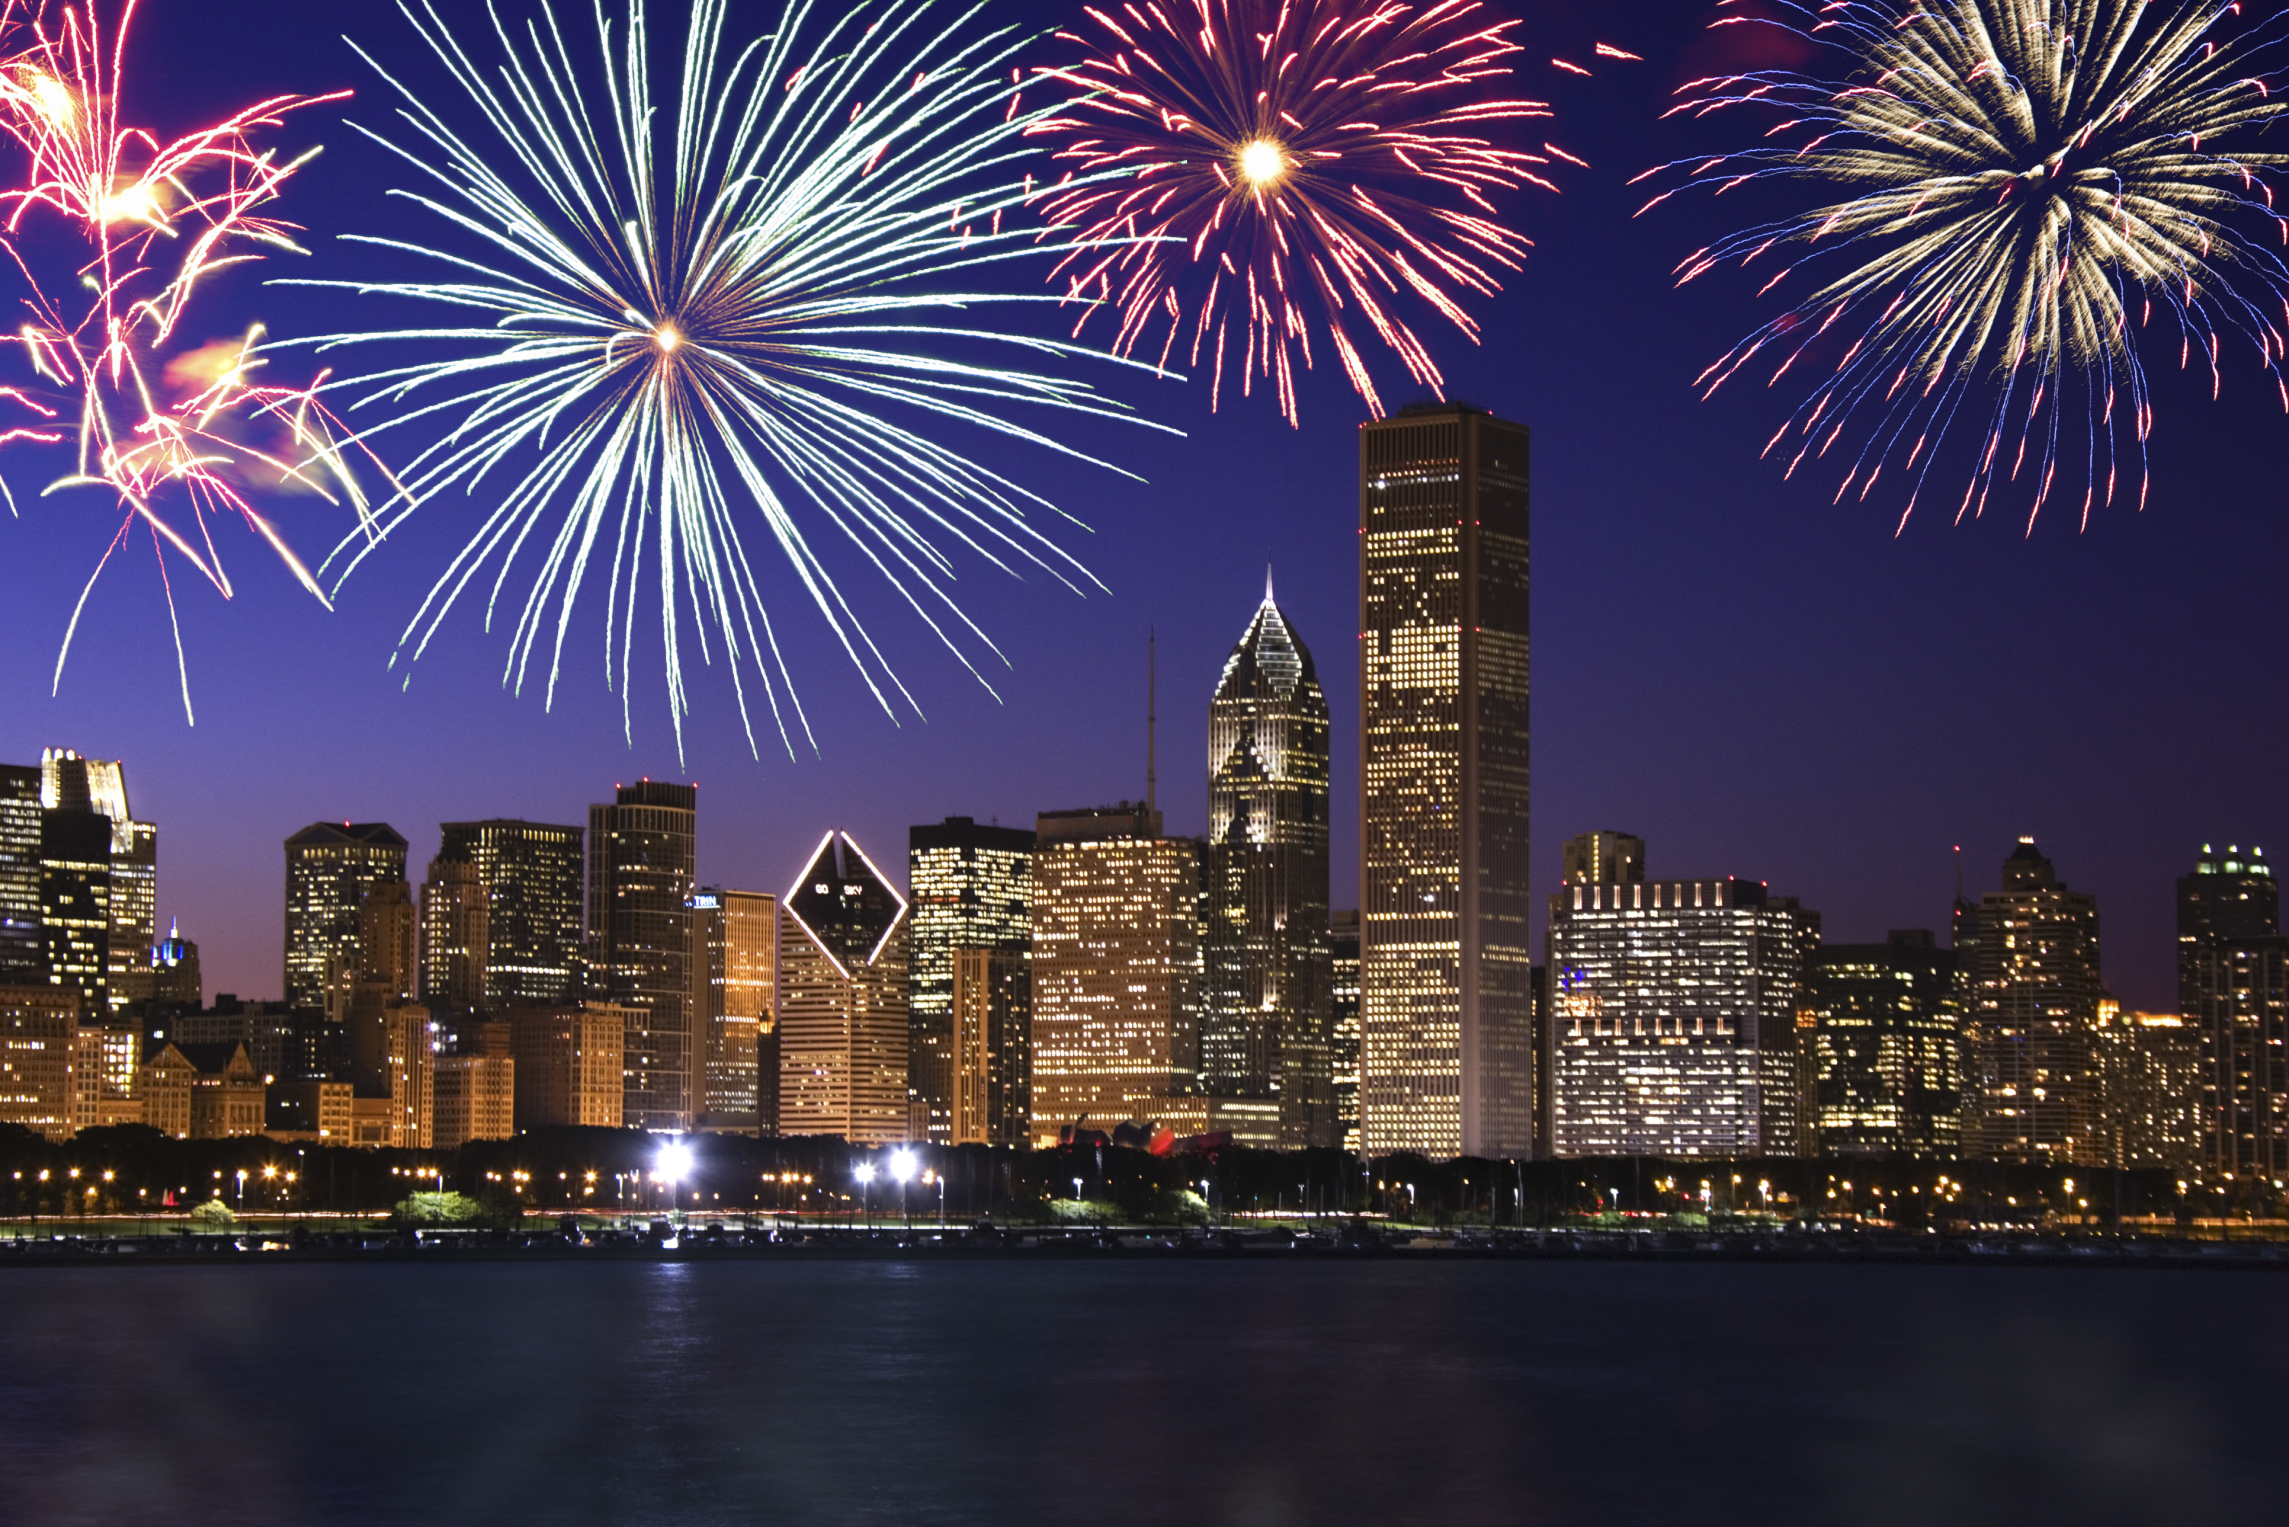 Fireworks over Chicago, Illinois